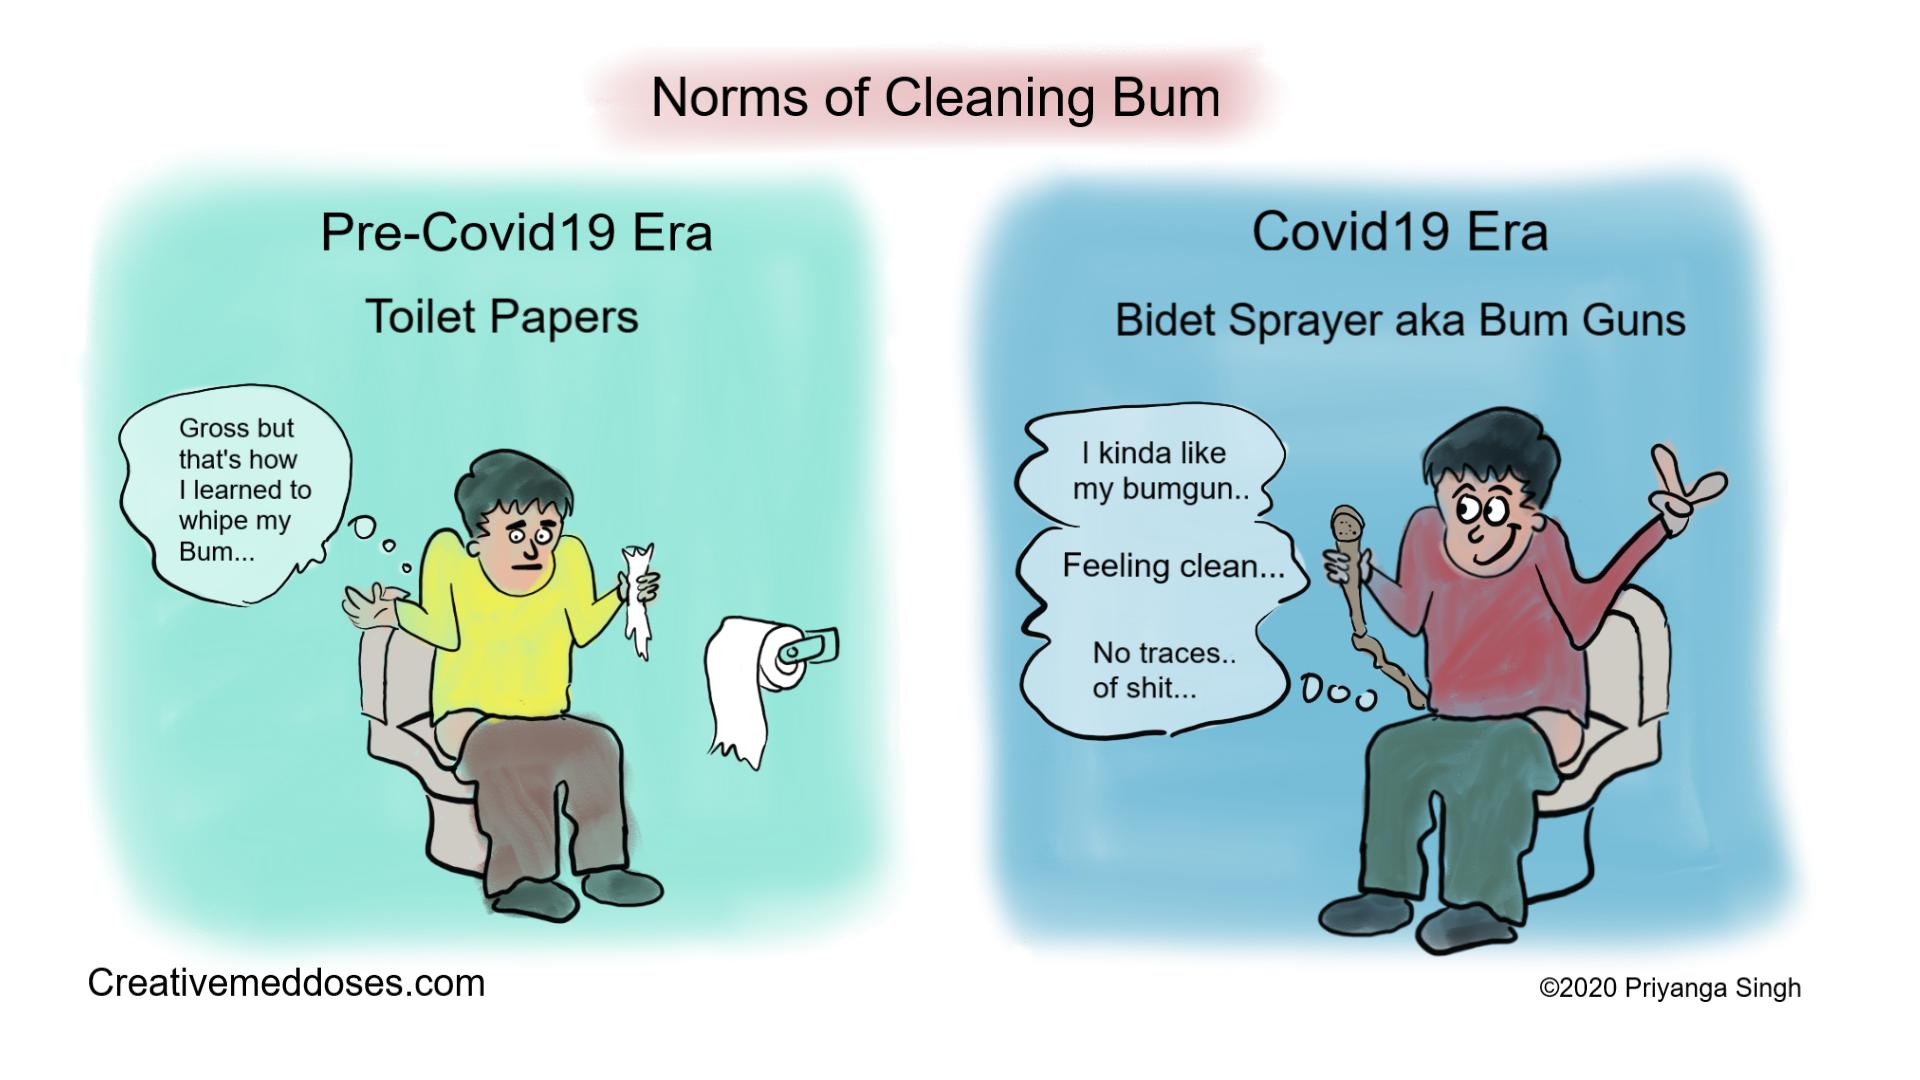 Covid19 and toilet paper apocalypse